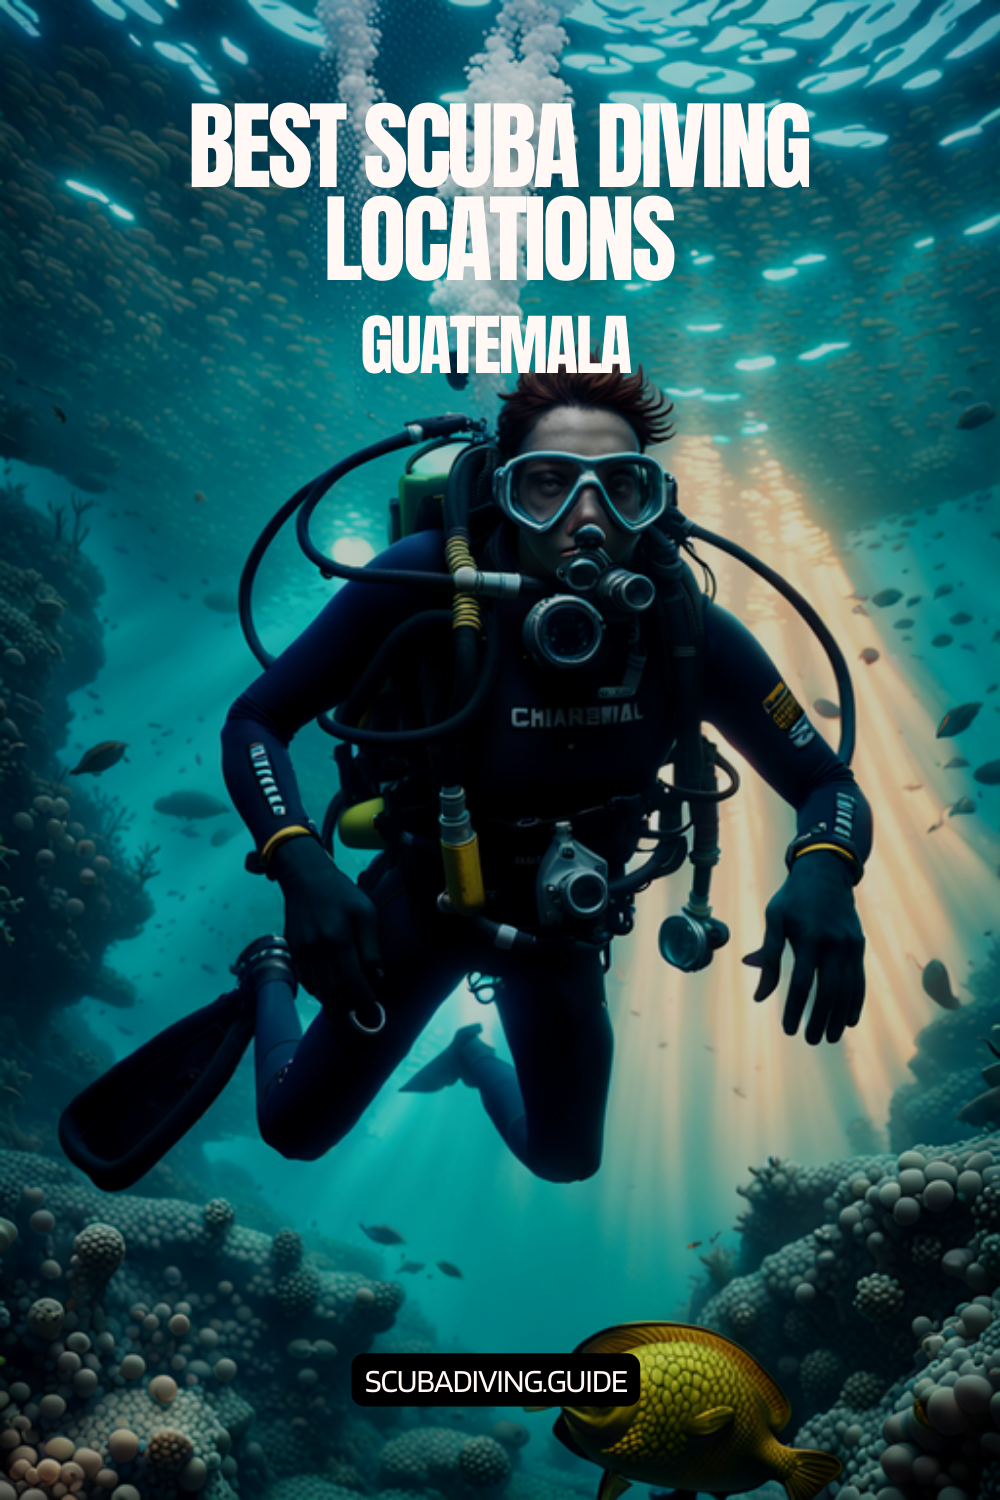 Scuba Diving Locations in Guatemala